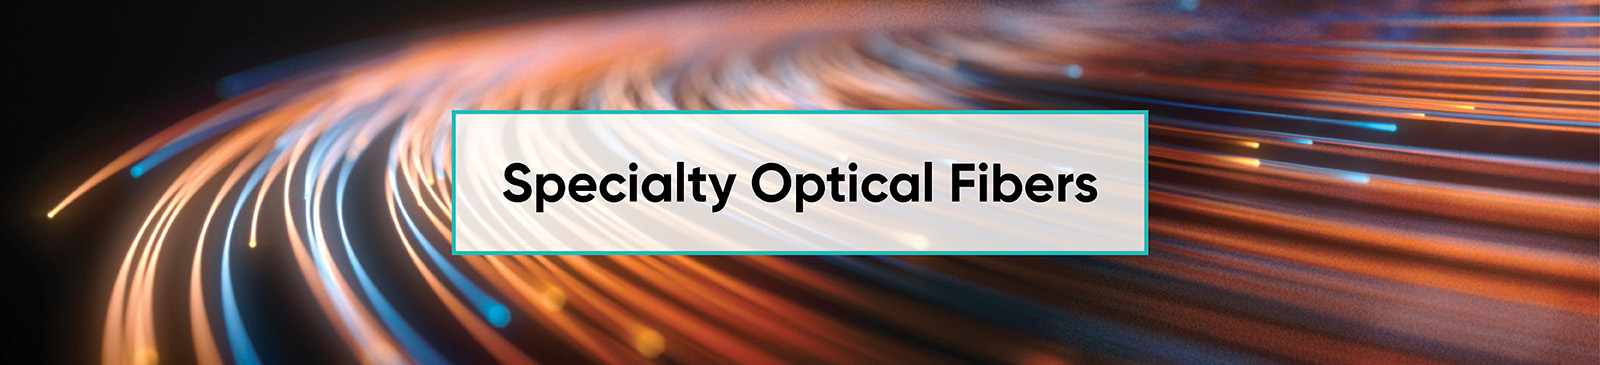 Specialty Optical Fibers